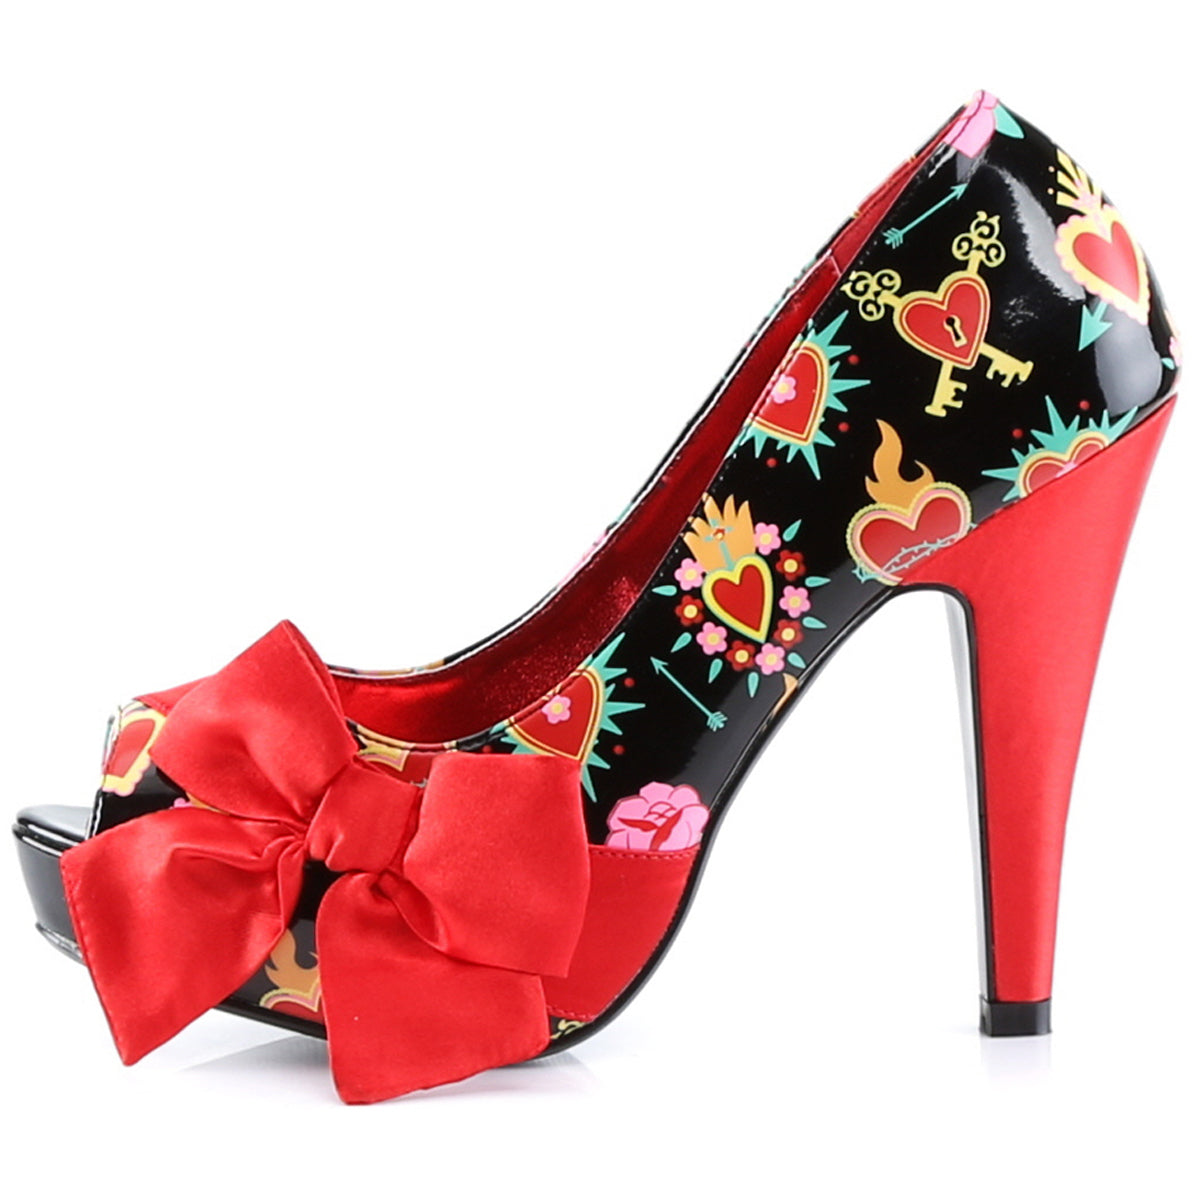 Retro Graphic Print Bowtie Peep Toe Platform Pumps High Heels Shoes Pleaser Pin Up Couture BETTIE/13